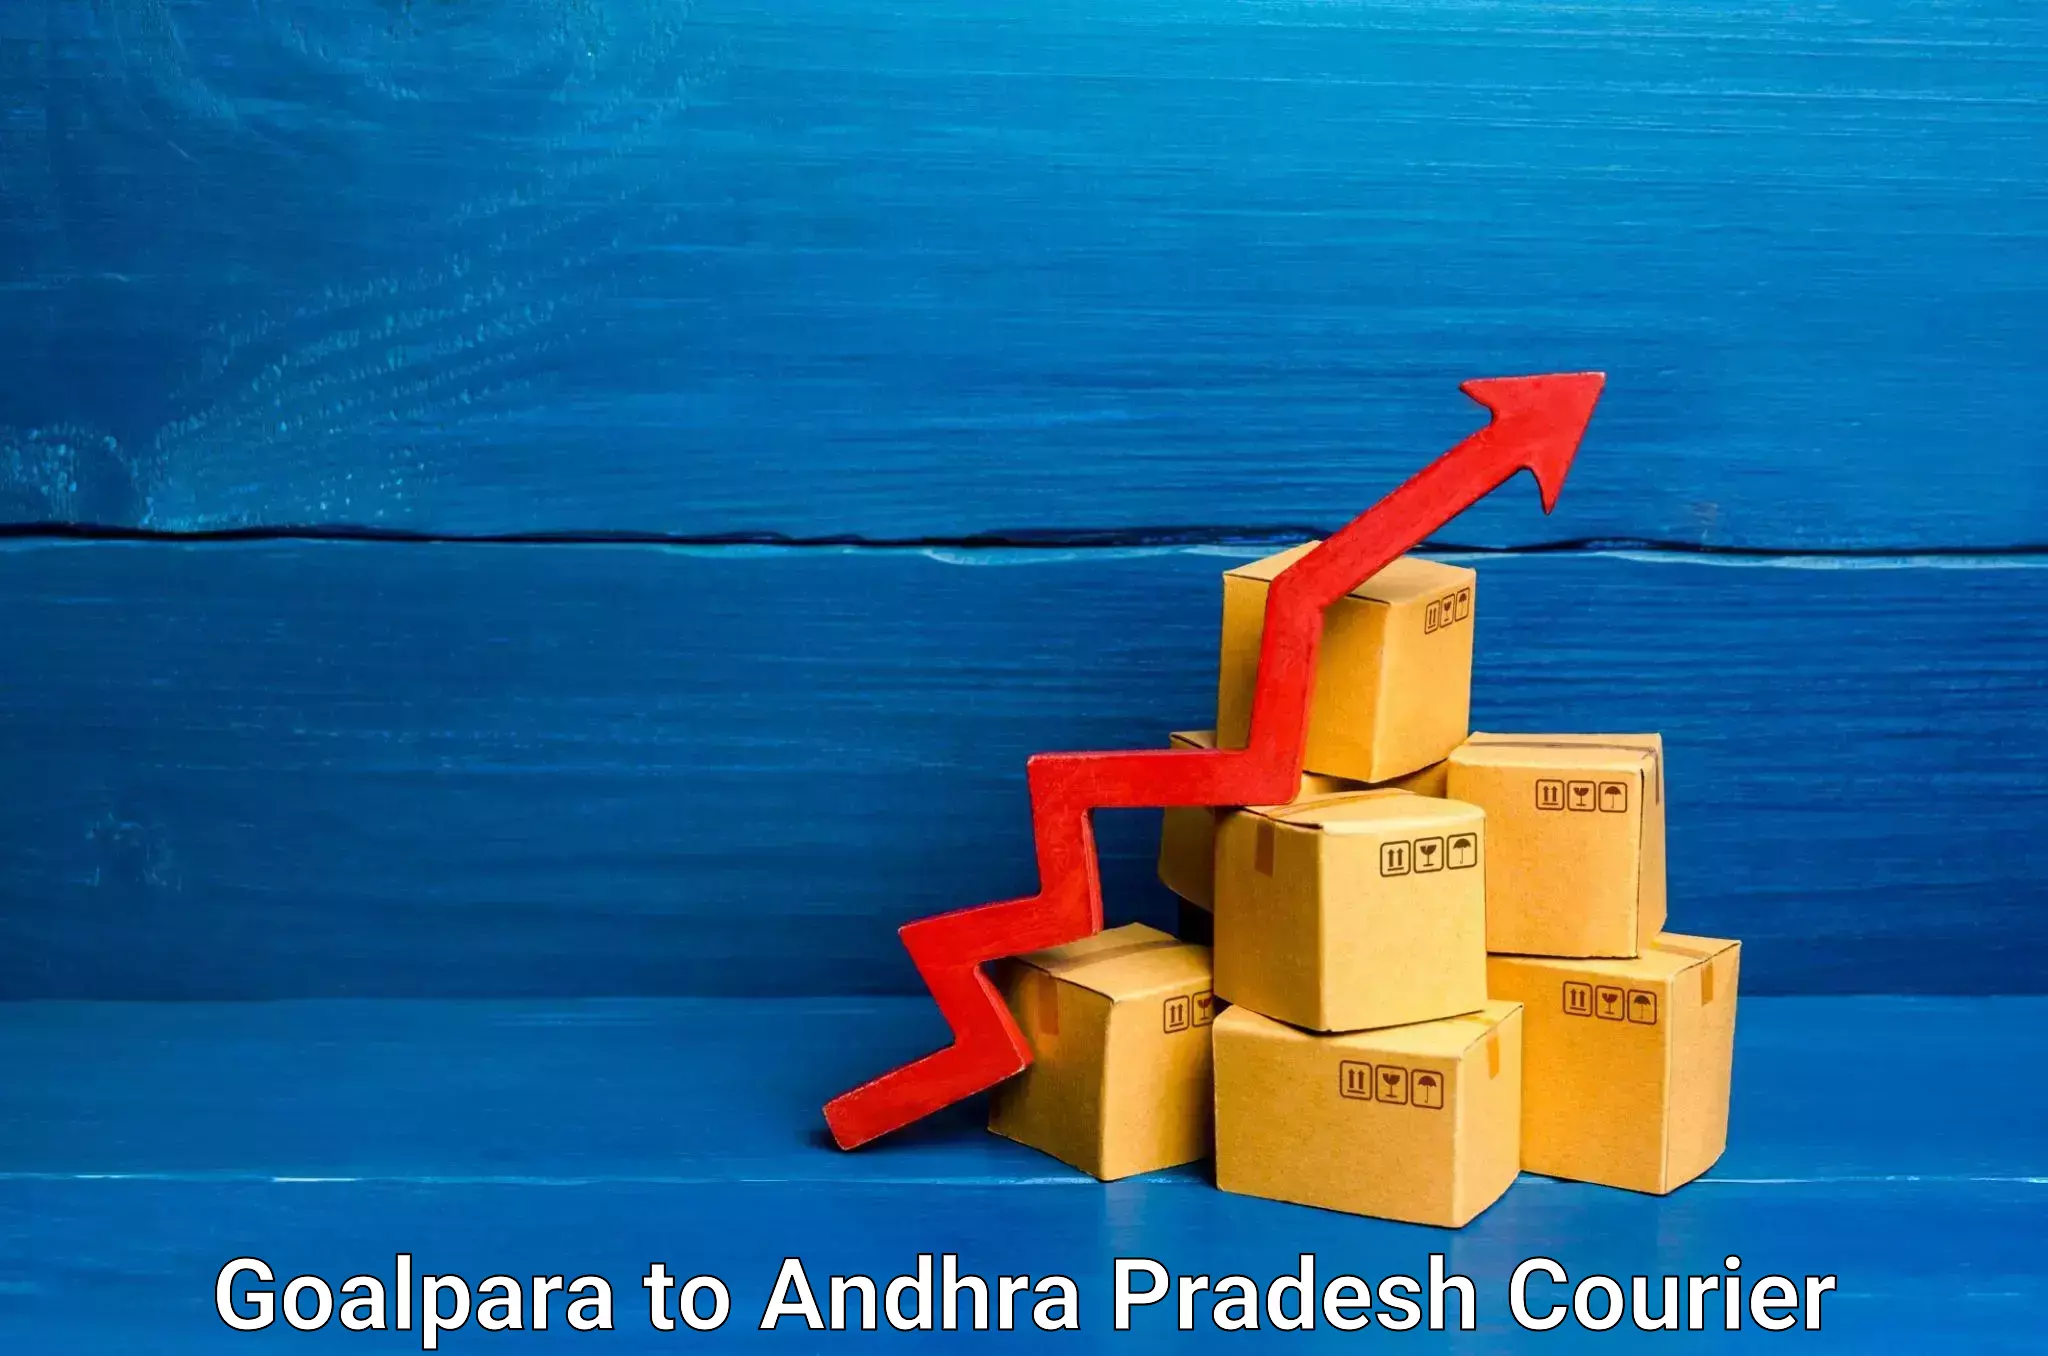 Cash on delivery service Goalpara to Guntakal